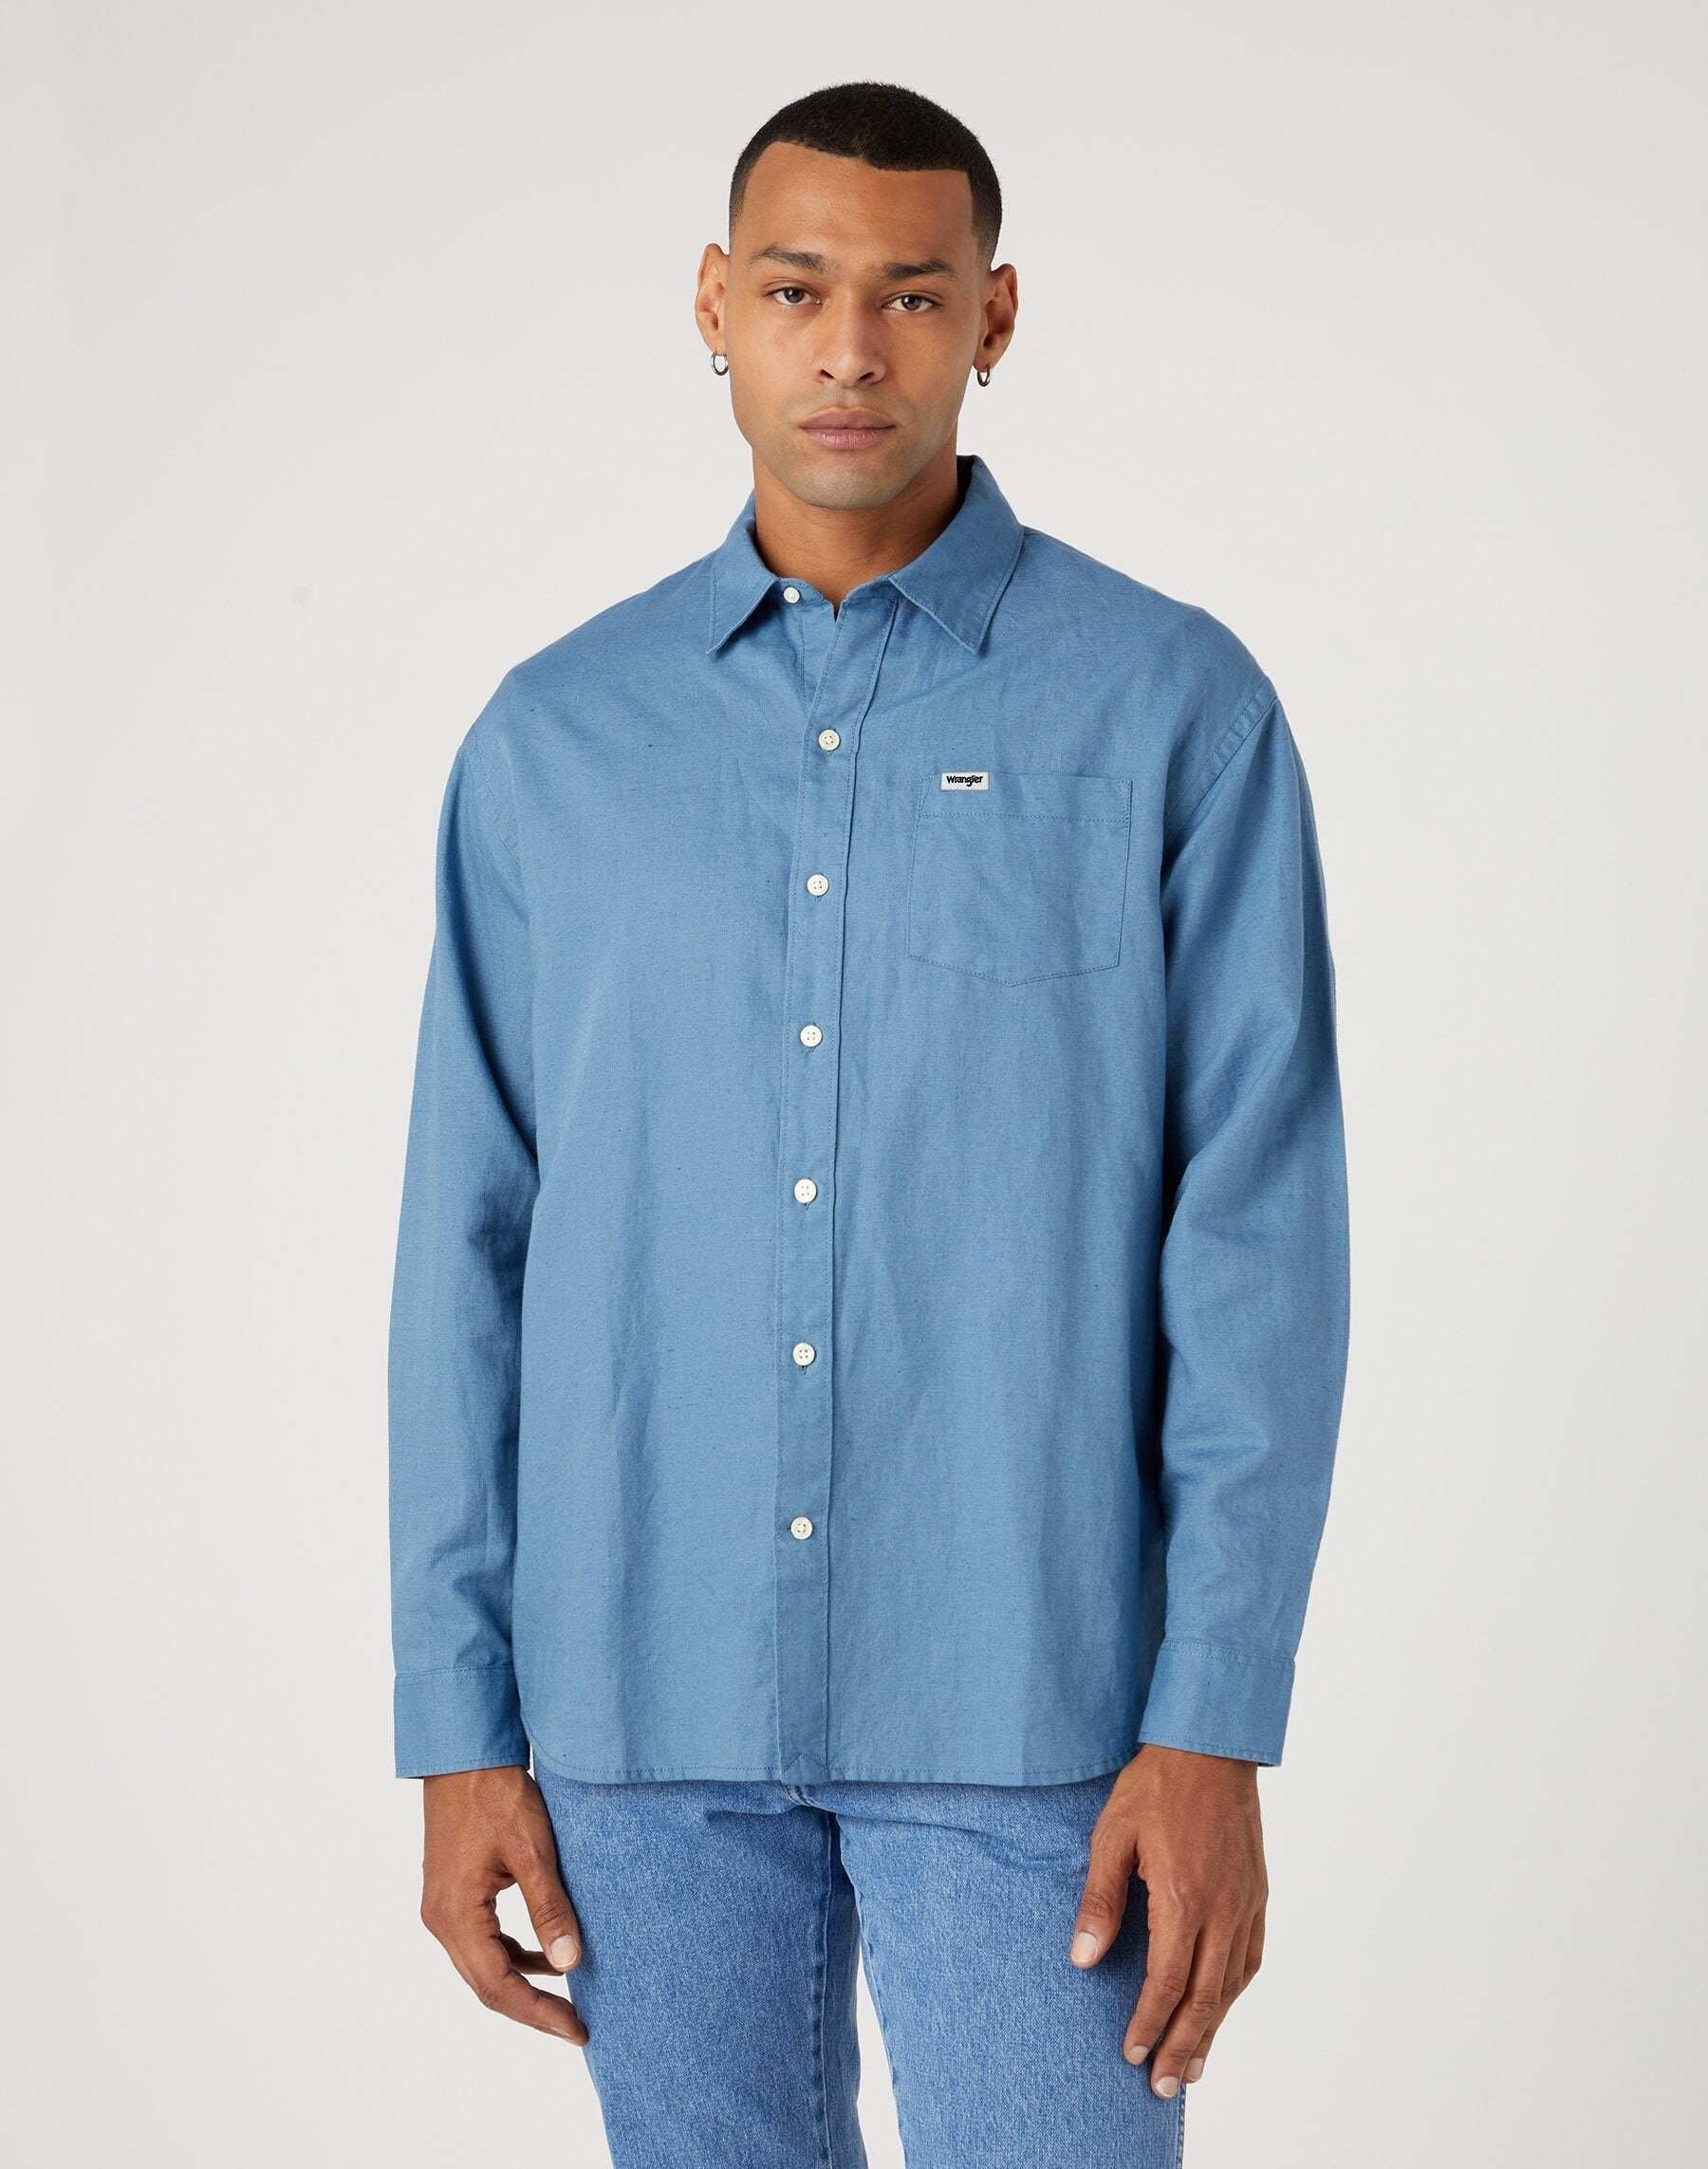 Hemden One Pocket Shirt Herren Blau S von Wrangler